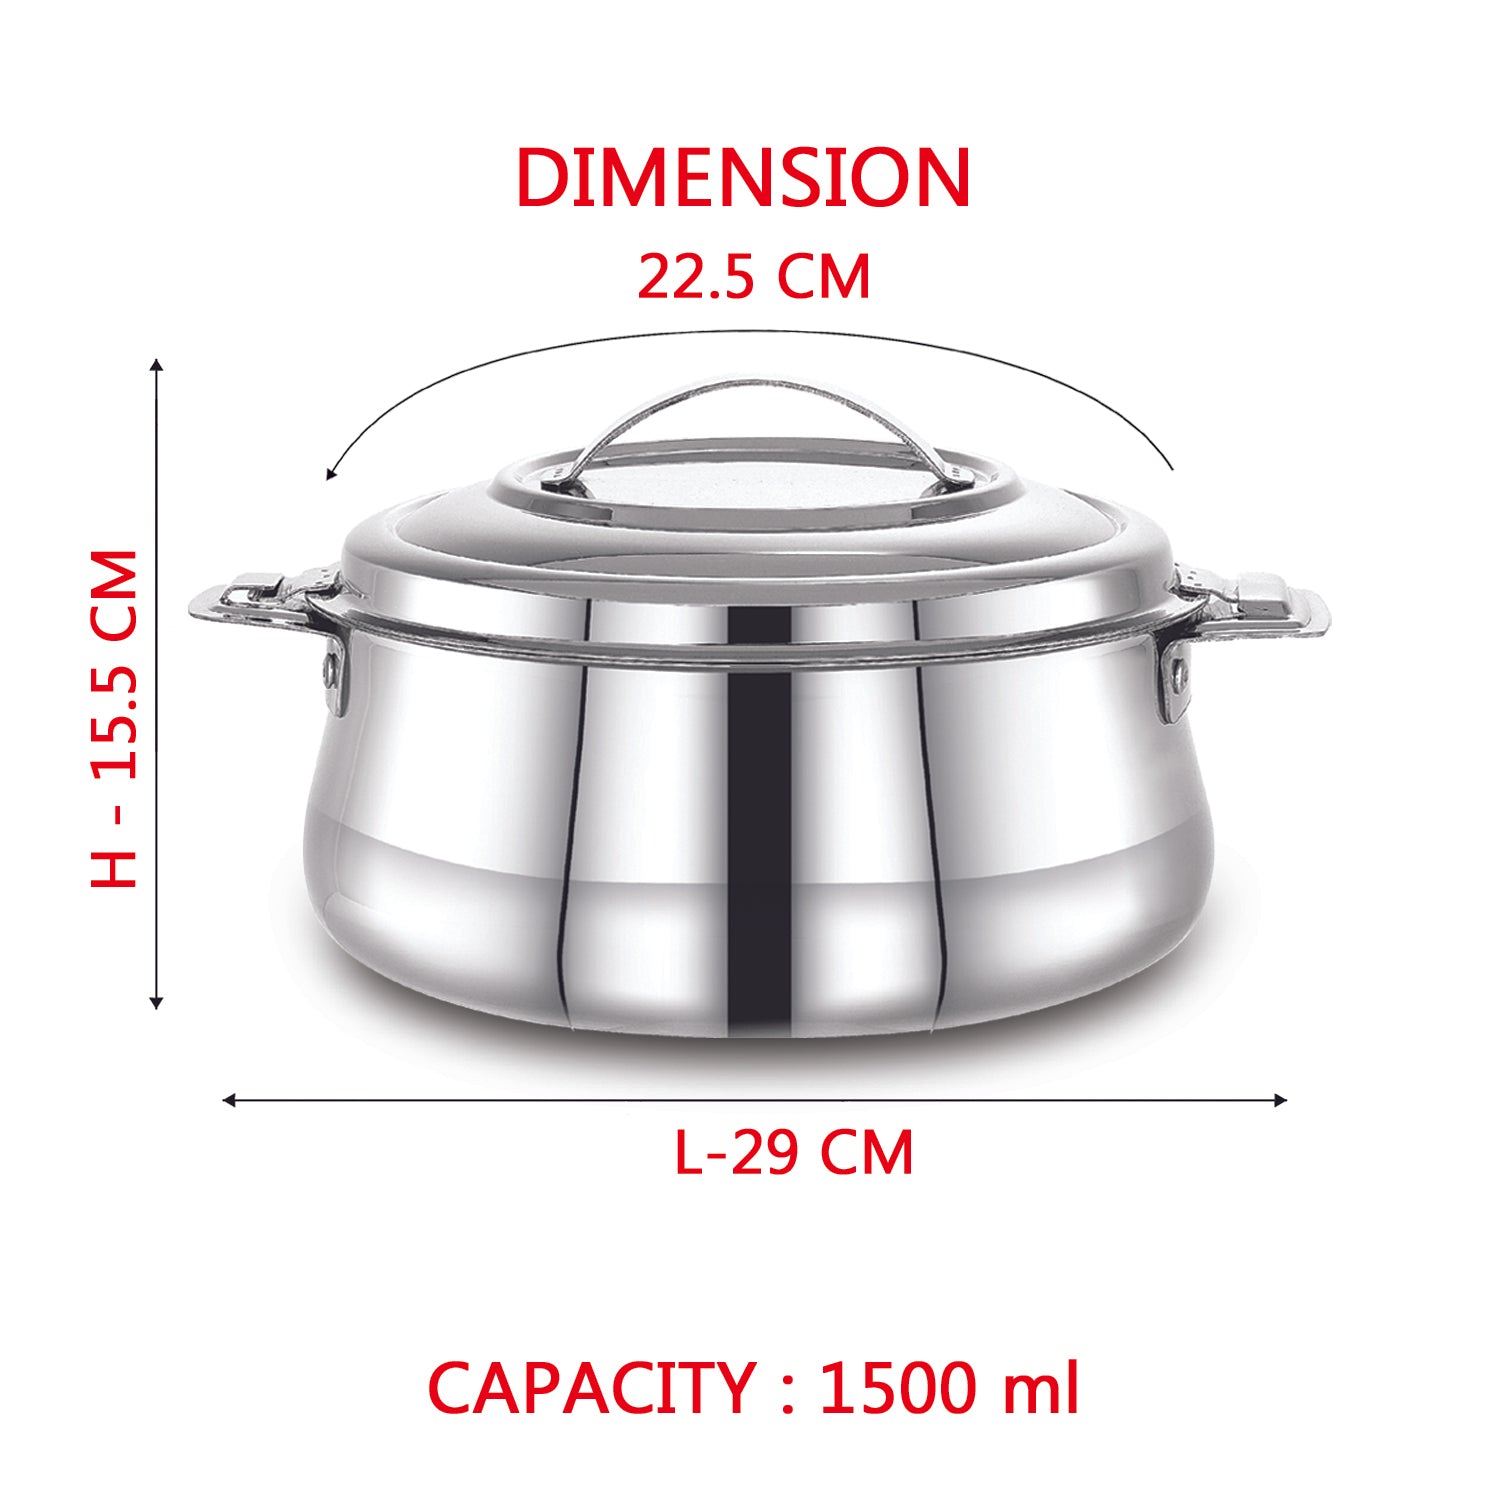 AVIAS Riara Silver Premium Stainless steel casserole 1500ml